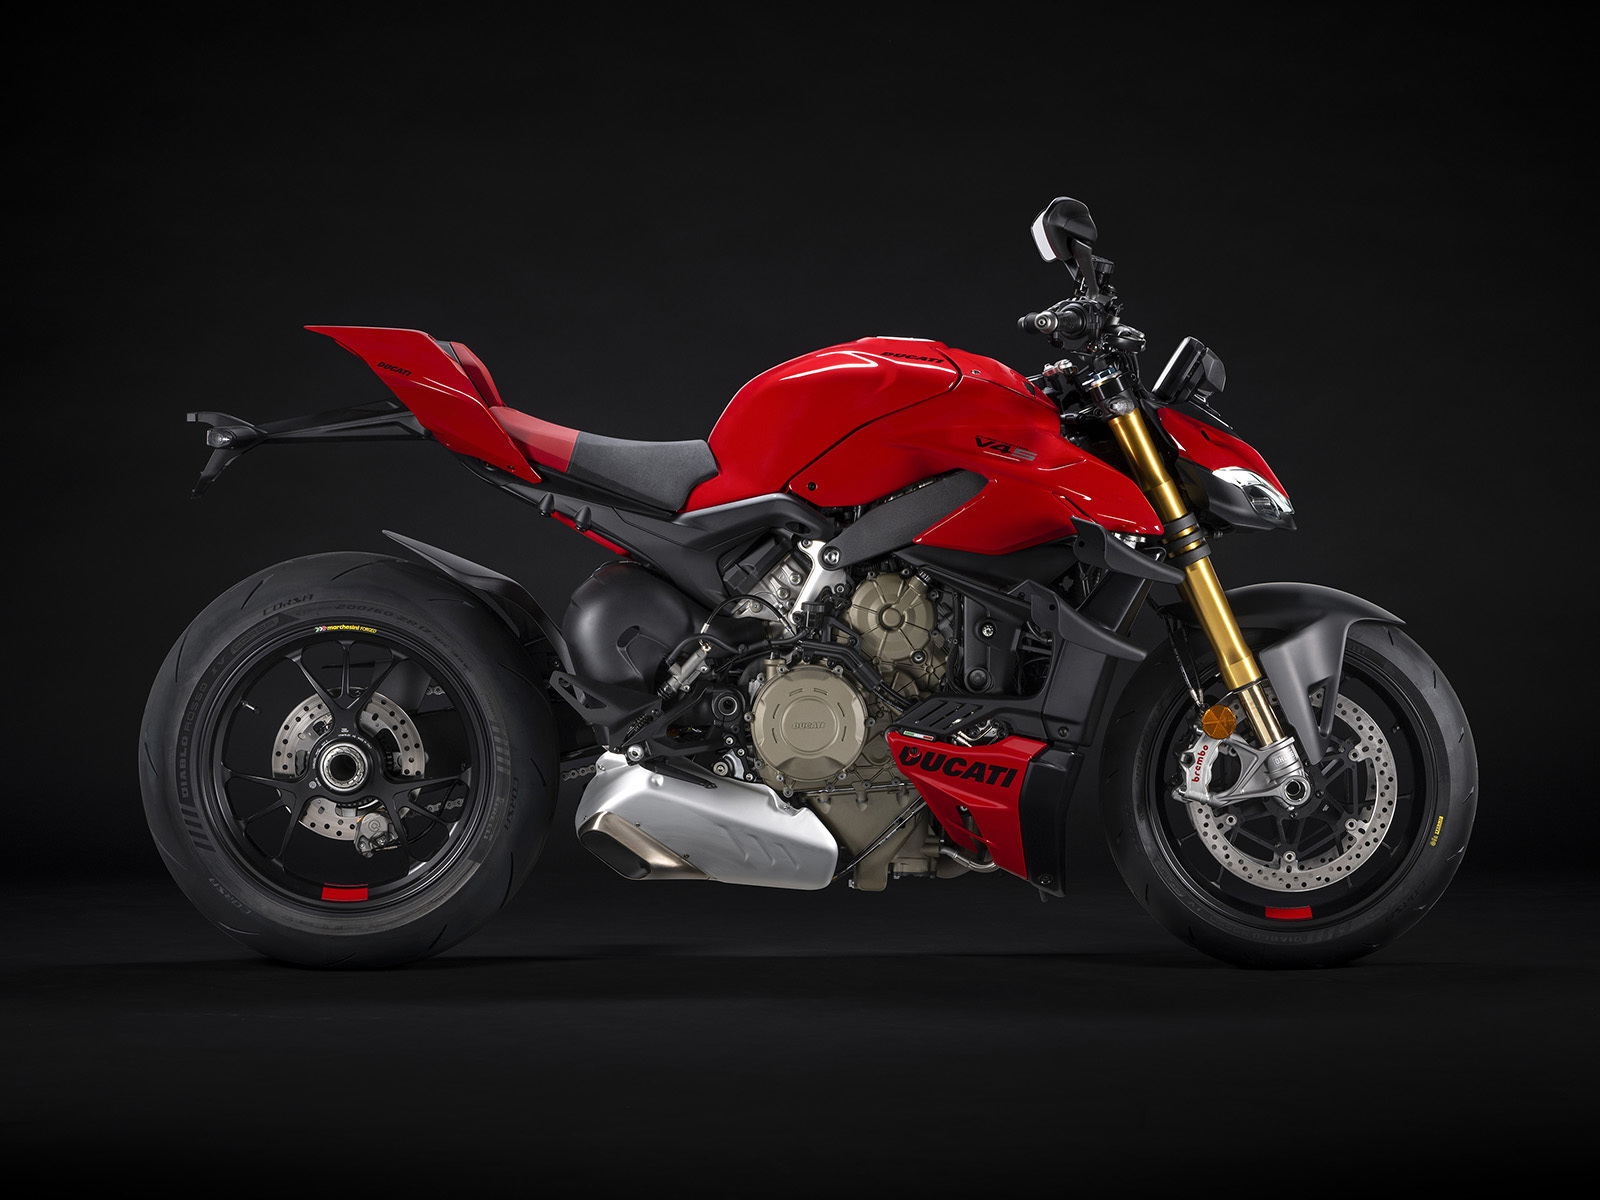 Ducati_Streetfighter_V4_5.jpg